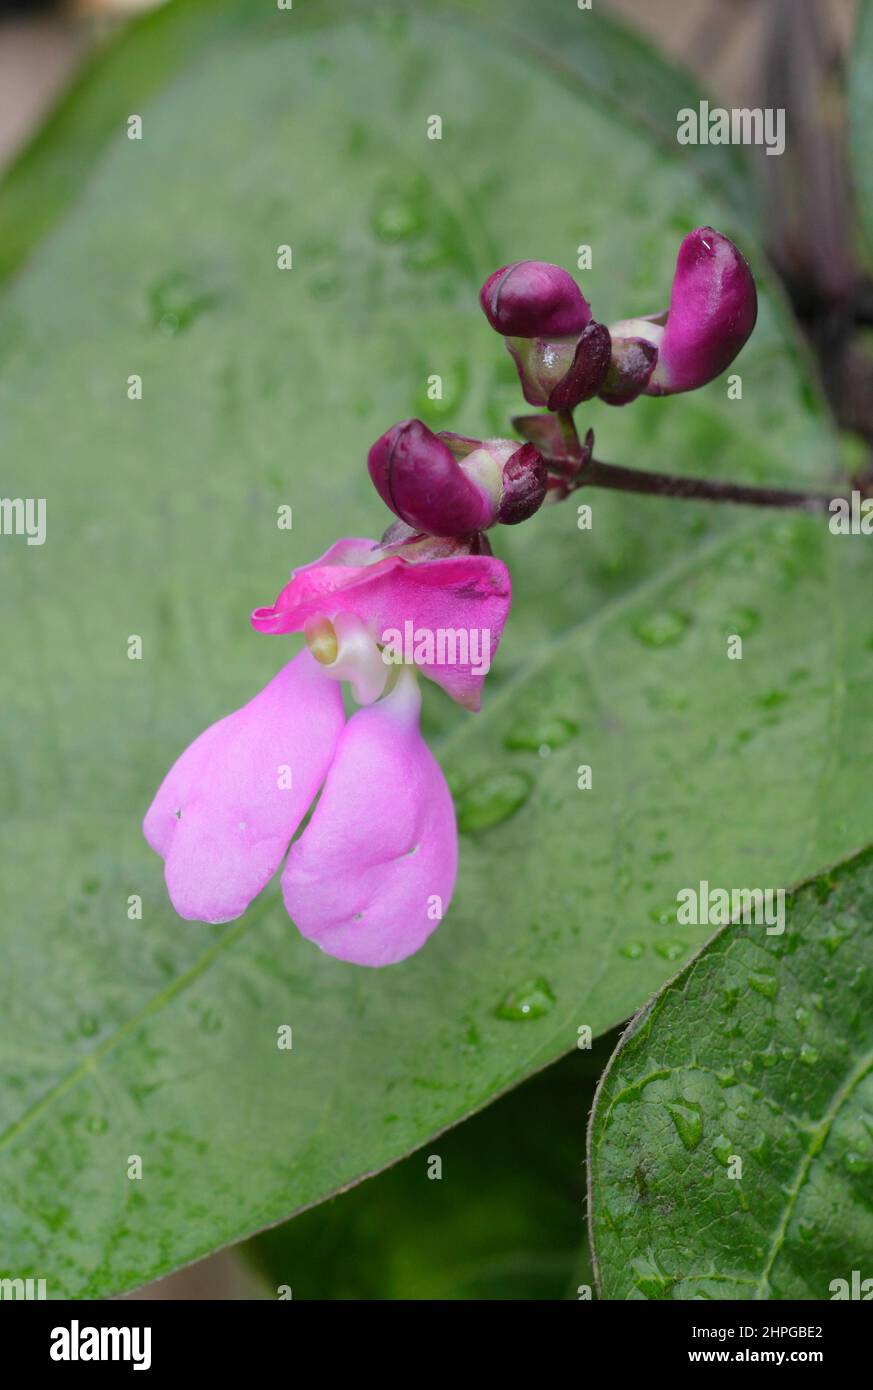 French bean flowers. Flowers of Phaseolus vulgaris 'Violet podded' climbing French bean. UK Stock Photo